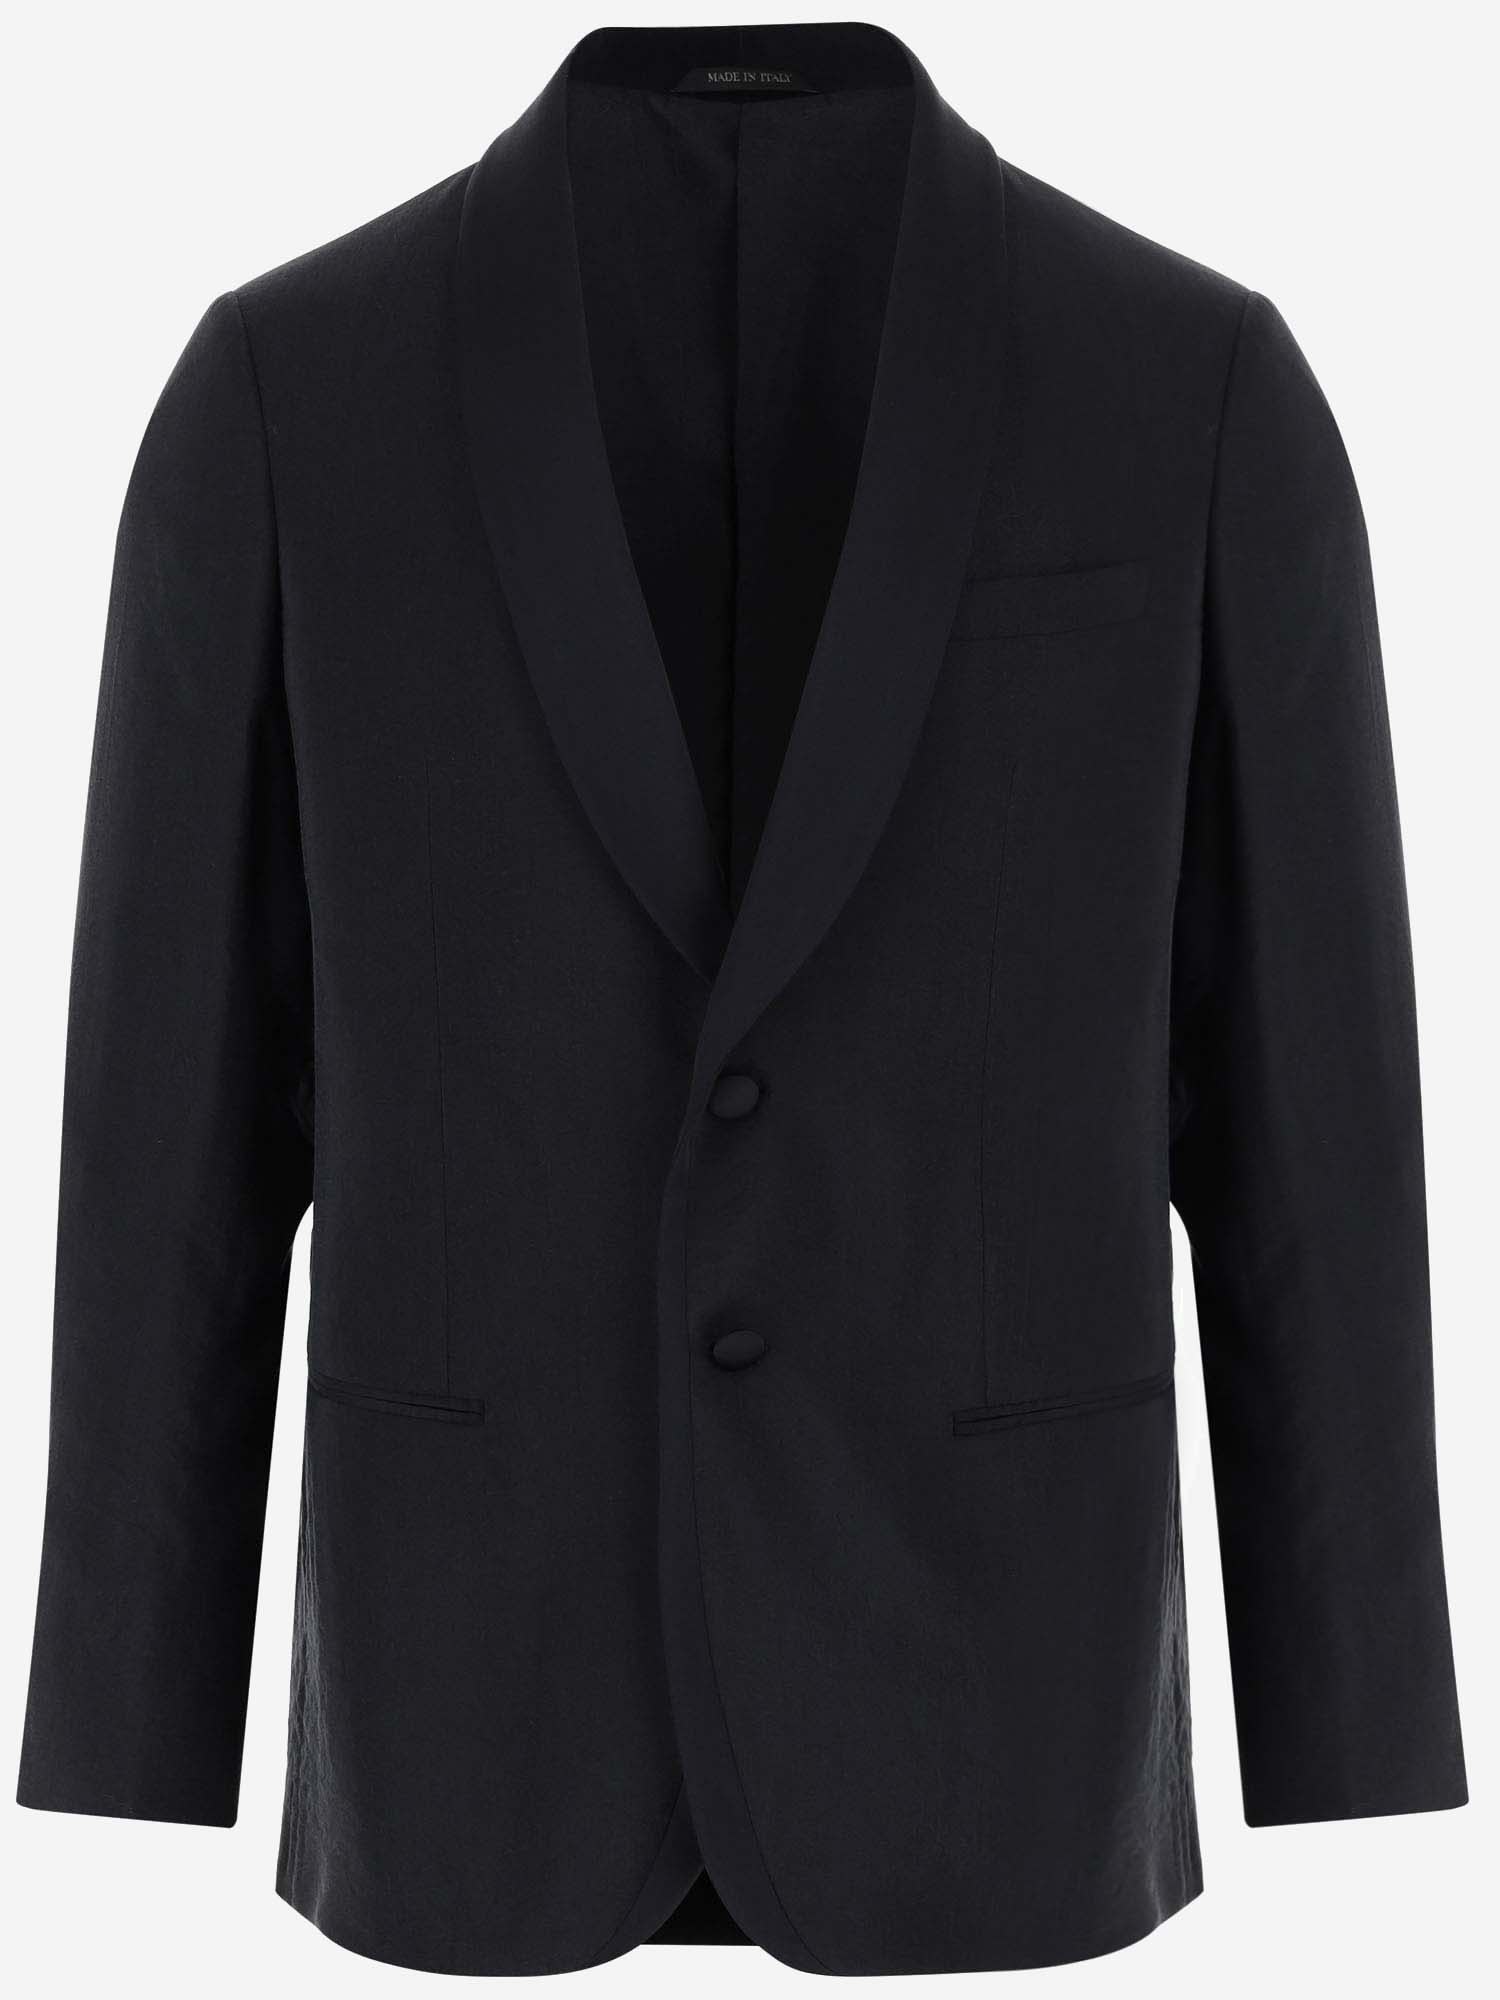 giorgio armani silk blend single-breasted jacket